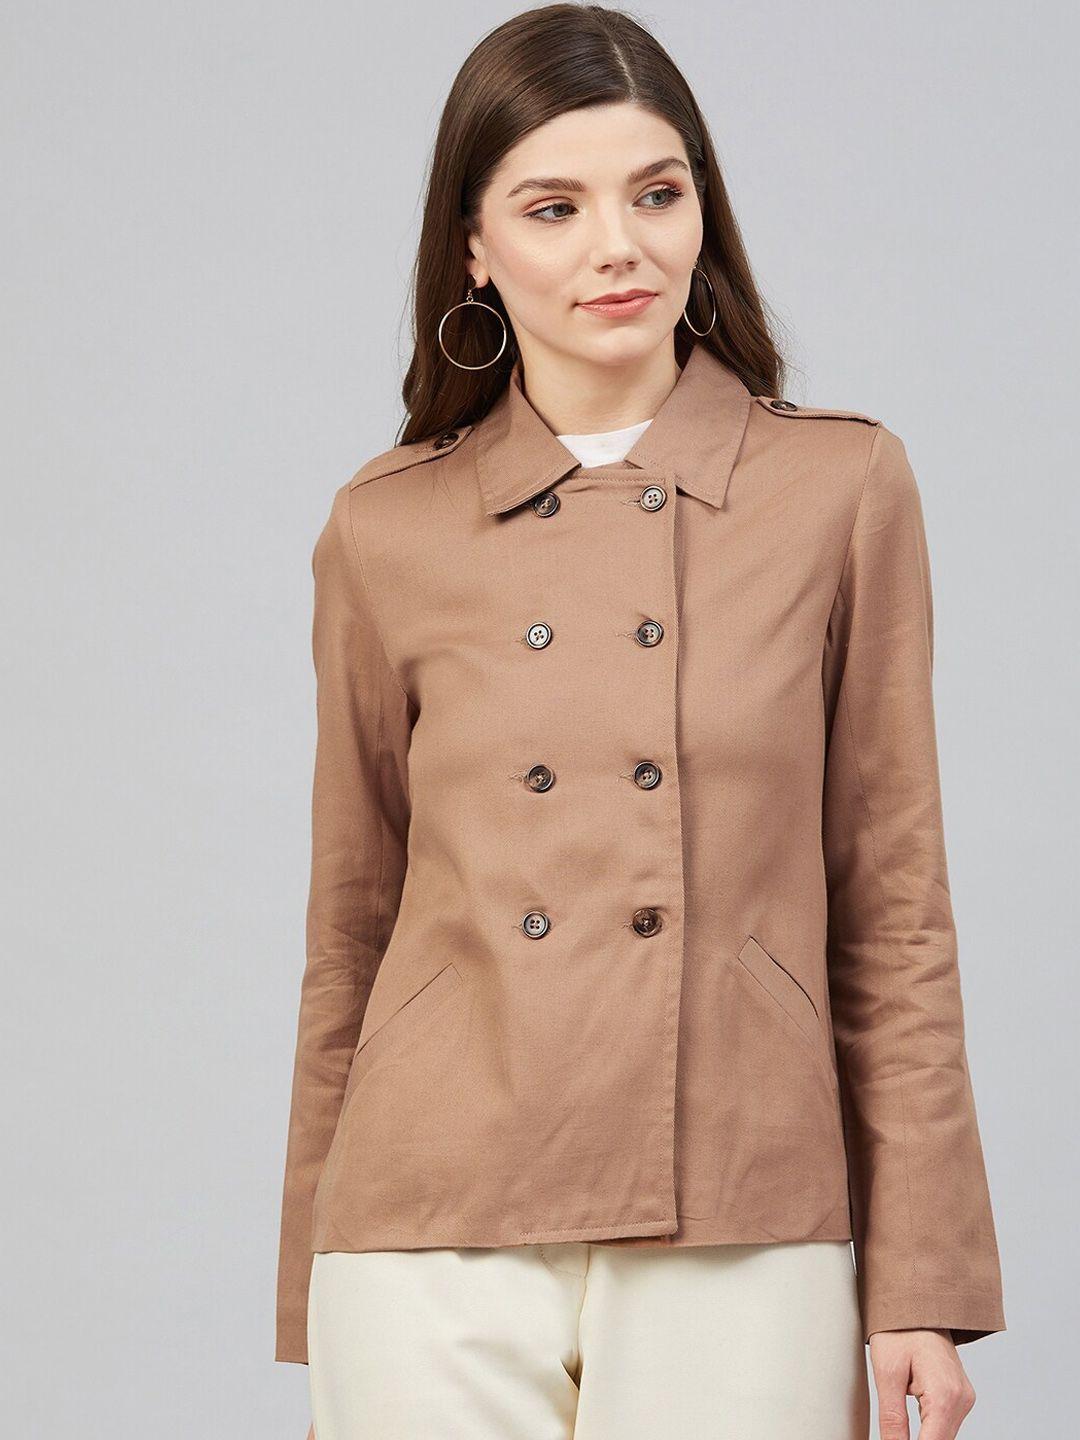 carlton-london-women-khaki-solid-tailored-jacket